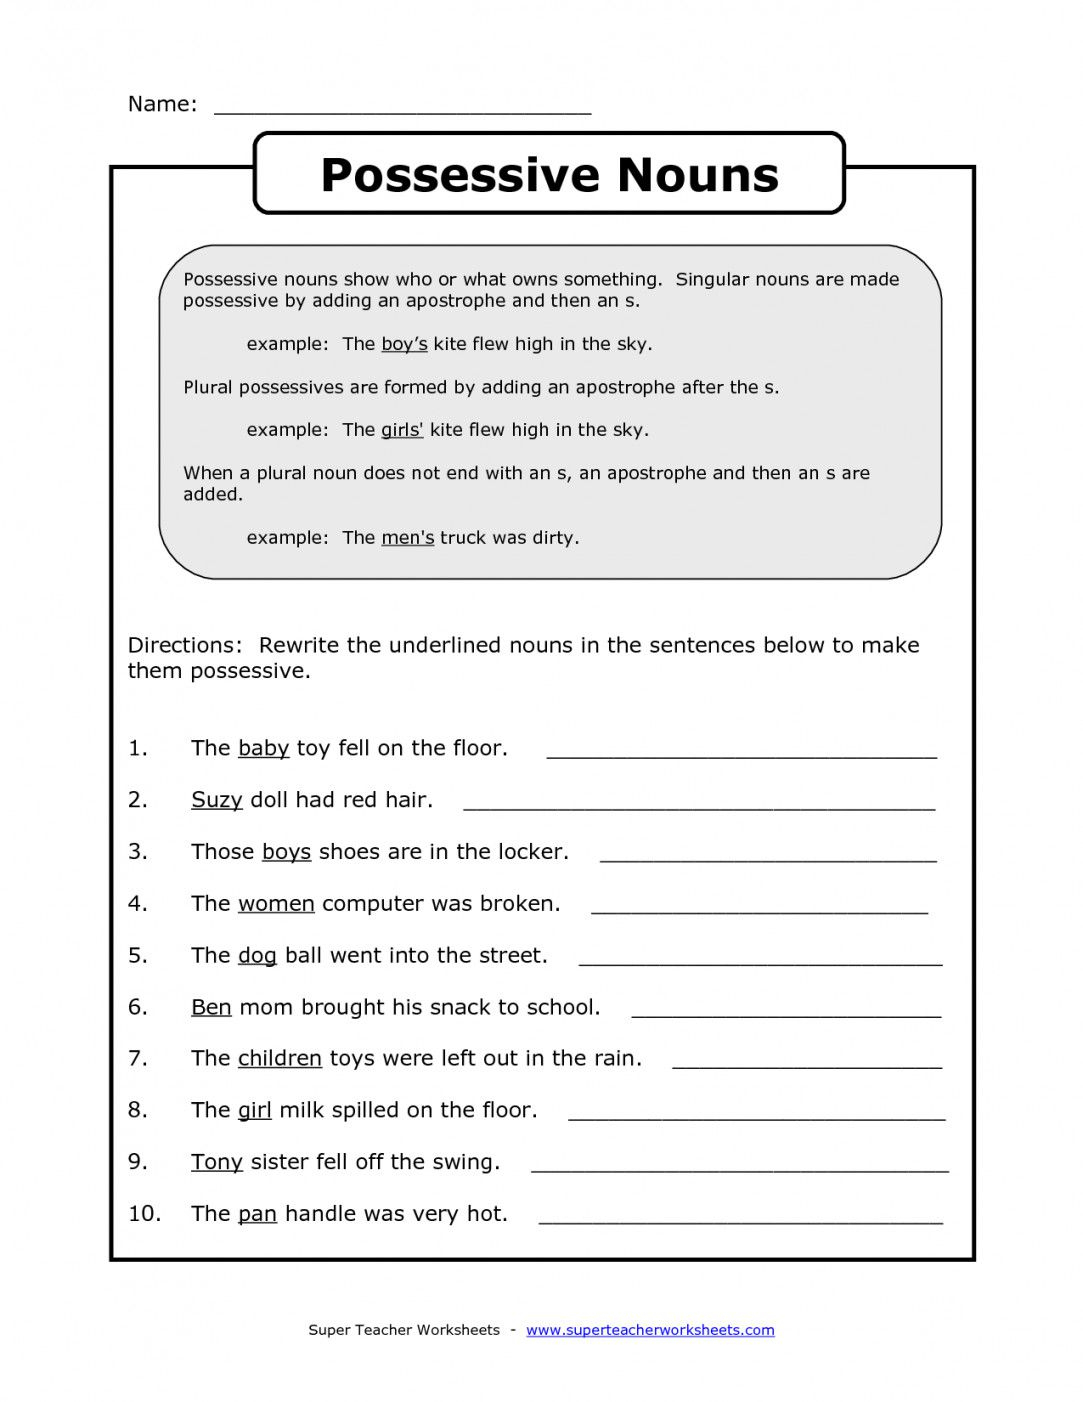 Free Printable Possessive Nouns Worksheets | Lostranquillos - Free Printable Possessive Nouns Worksheets